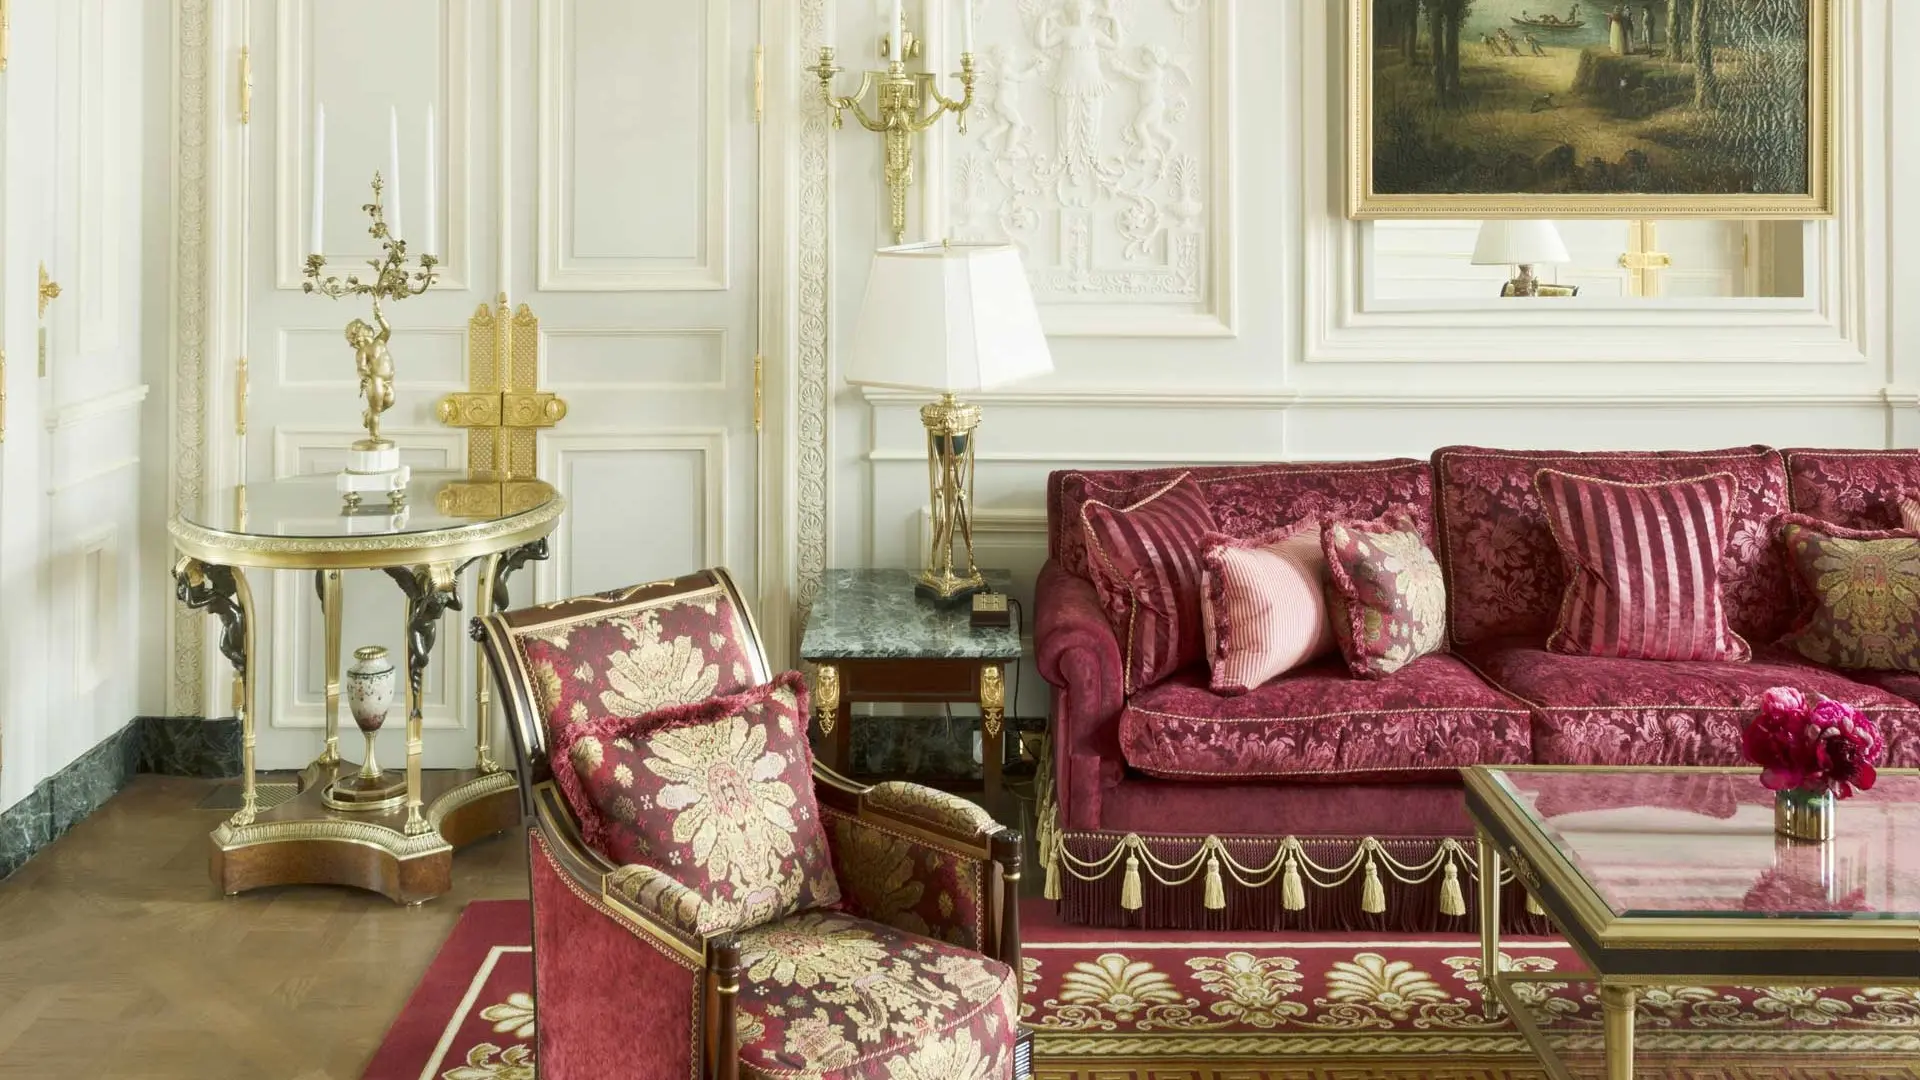 Hotel review Accommodation' - Ritz Paris - 7